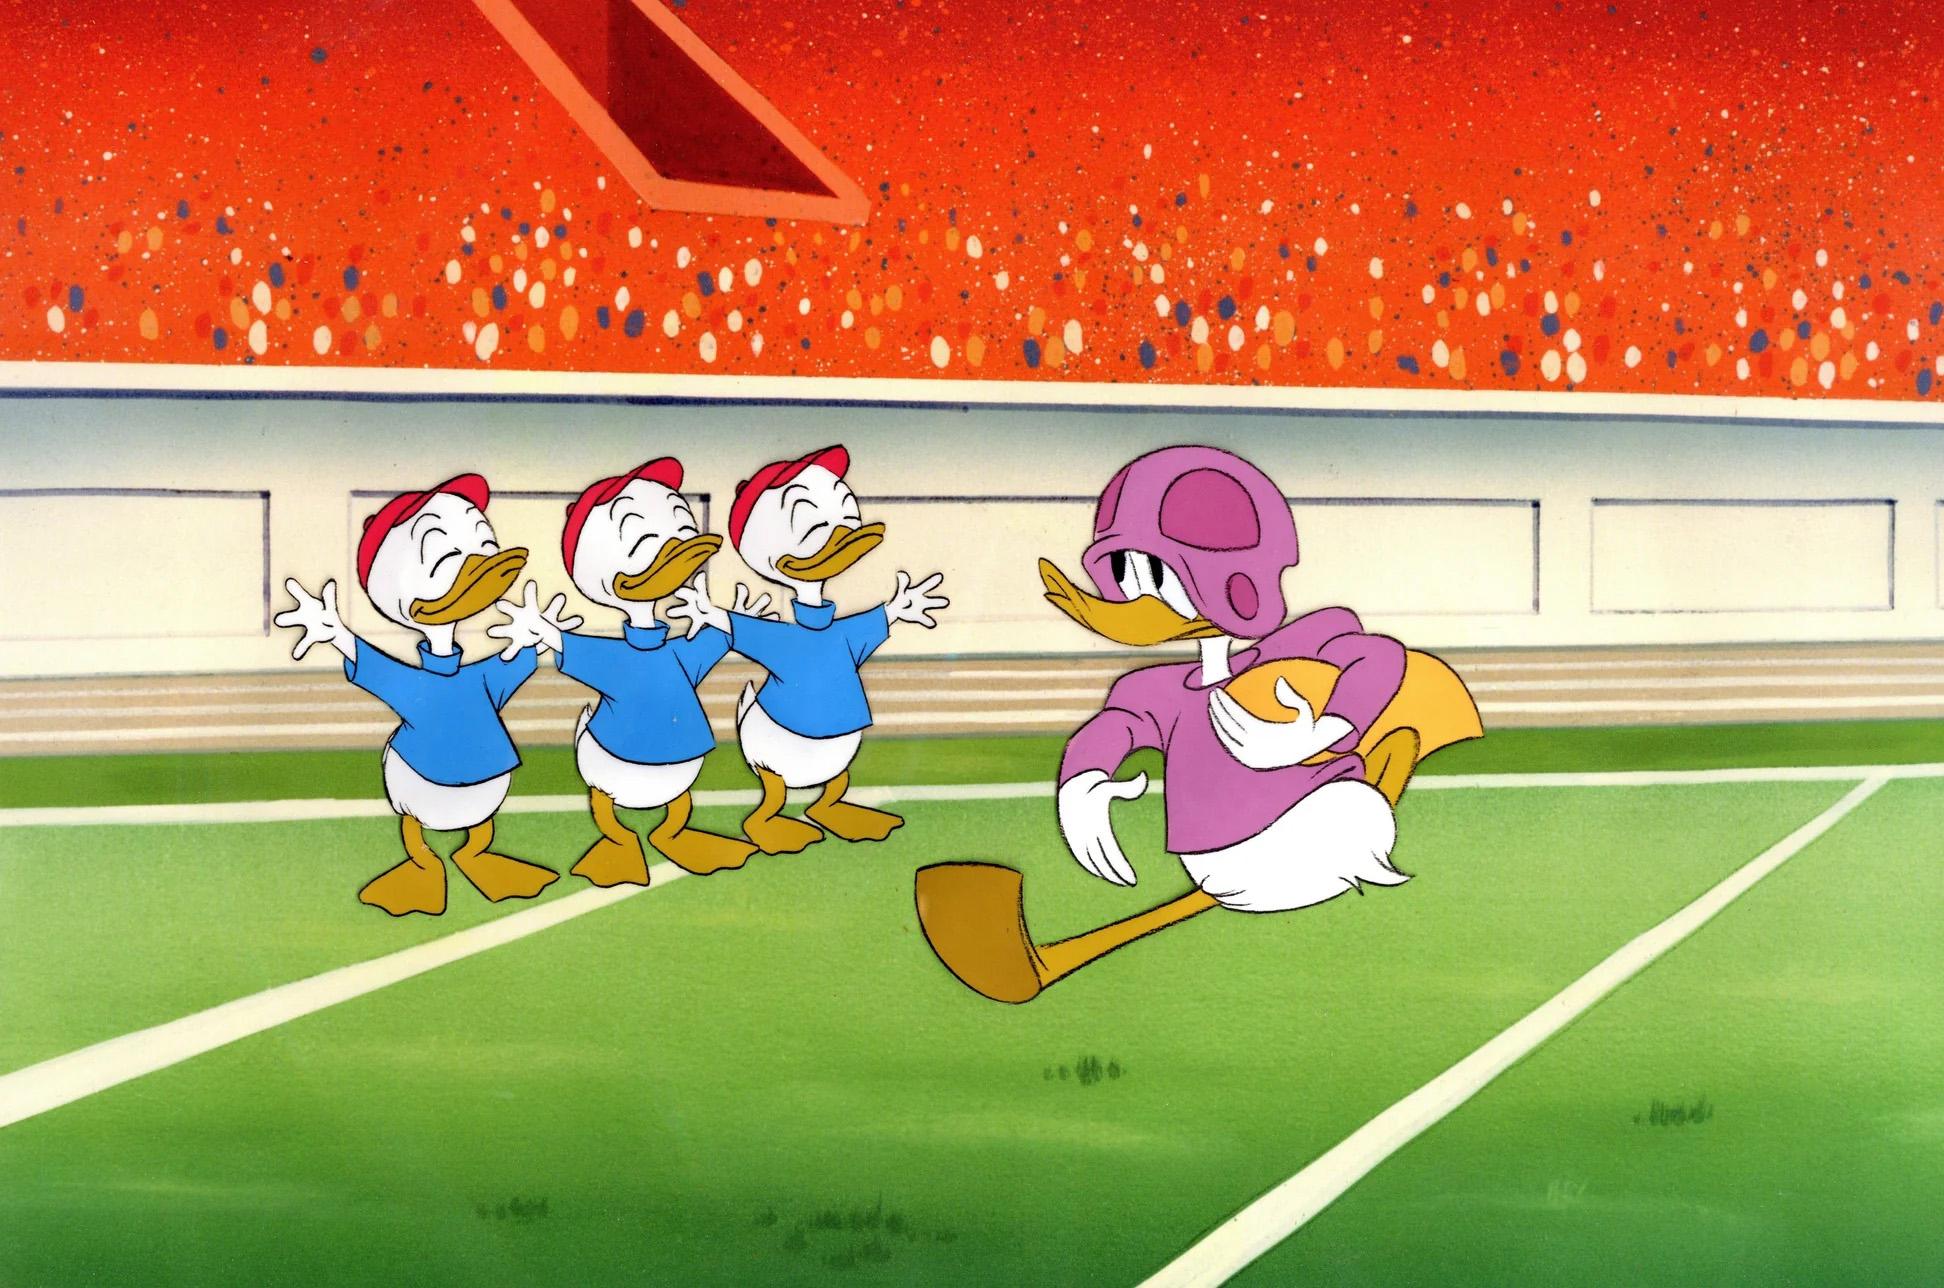 Donald Duck, Huey, Dewey, and Louie Original Production Cel - Art by Walt Disney Studio Artists